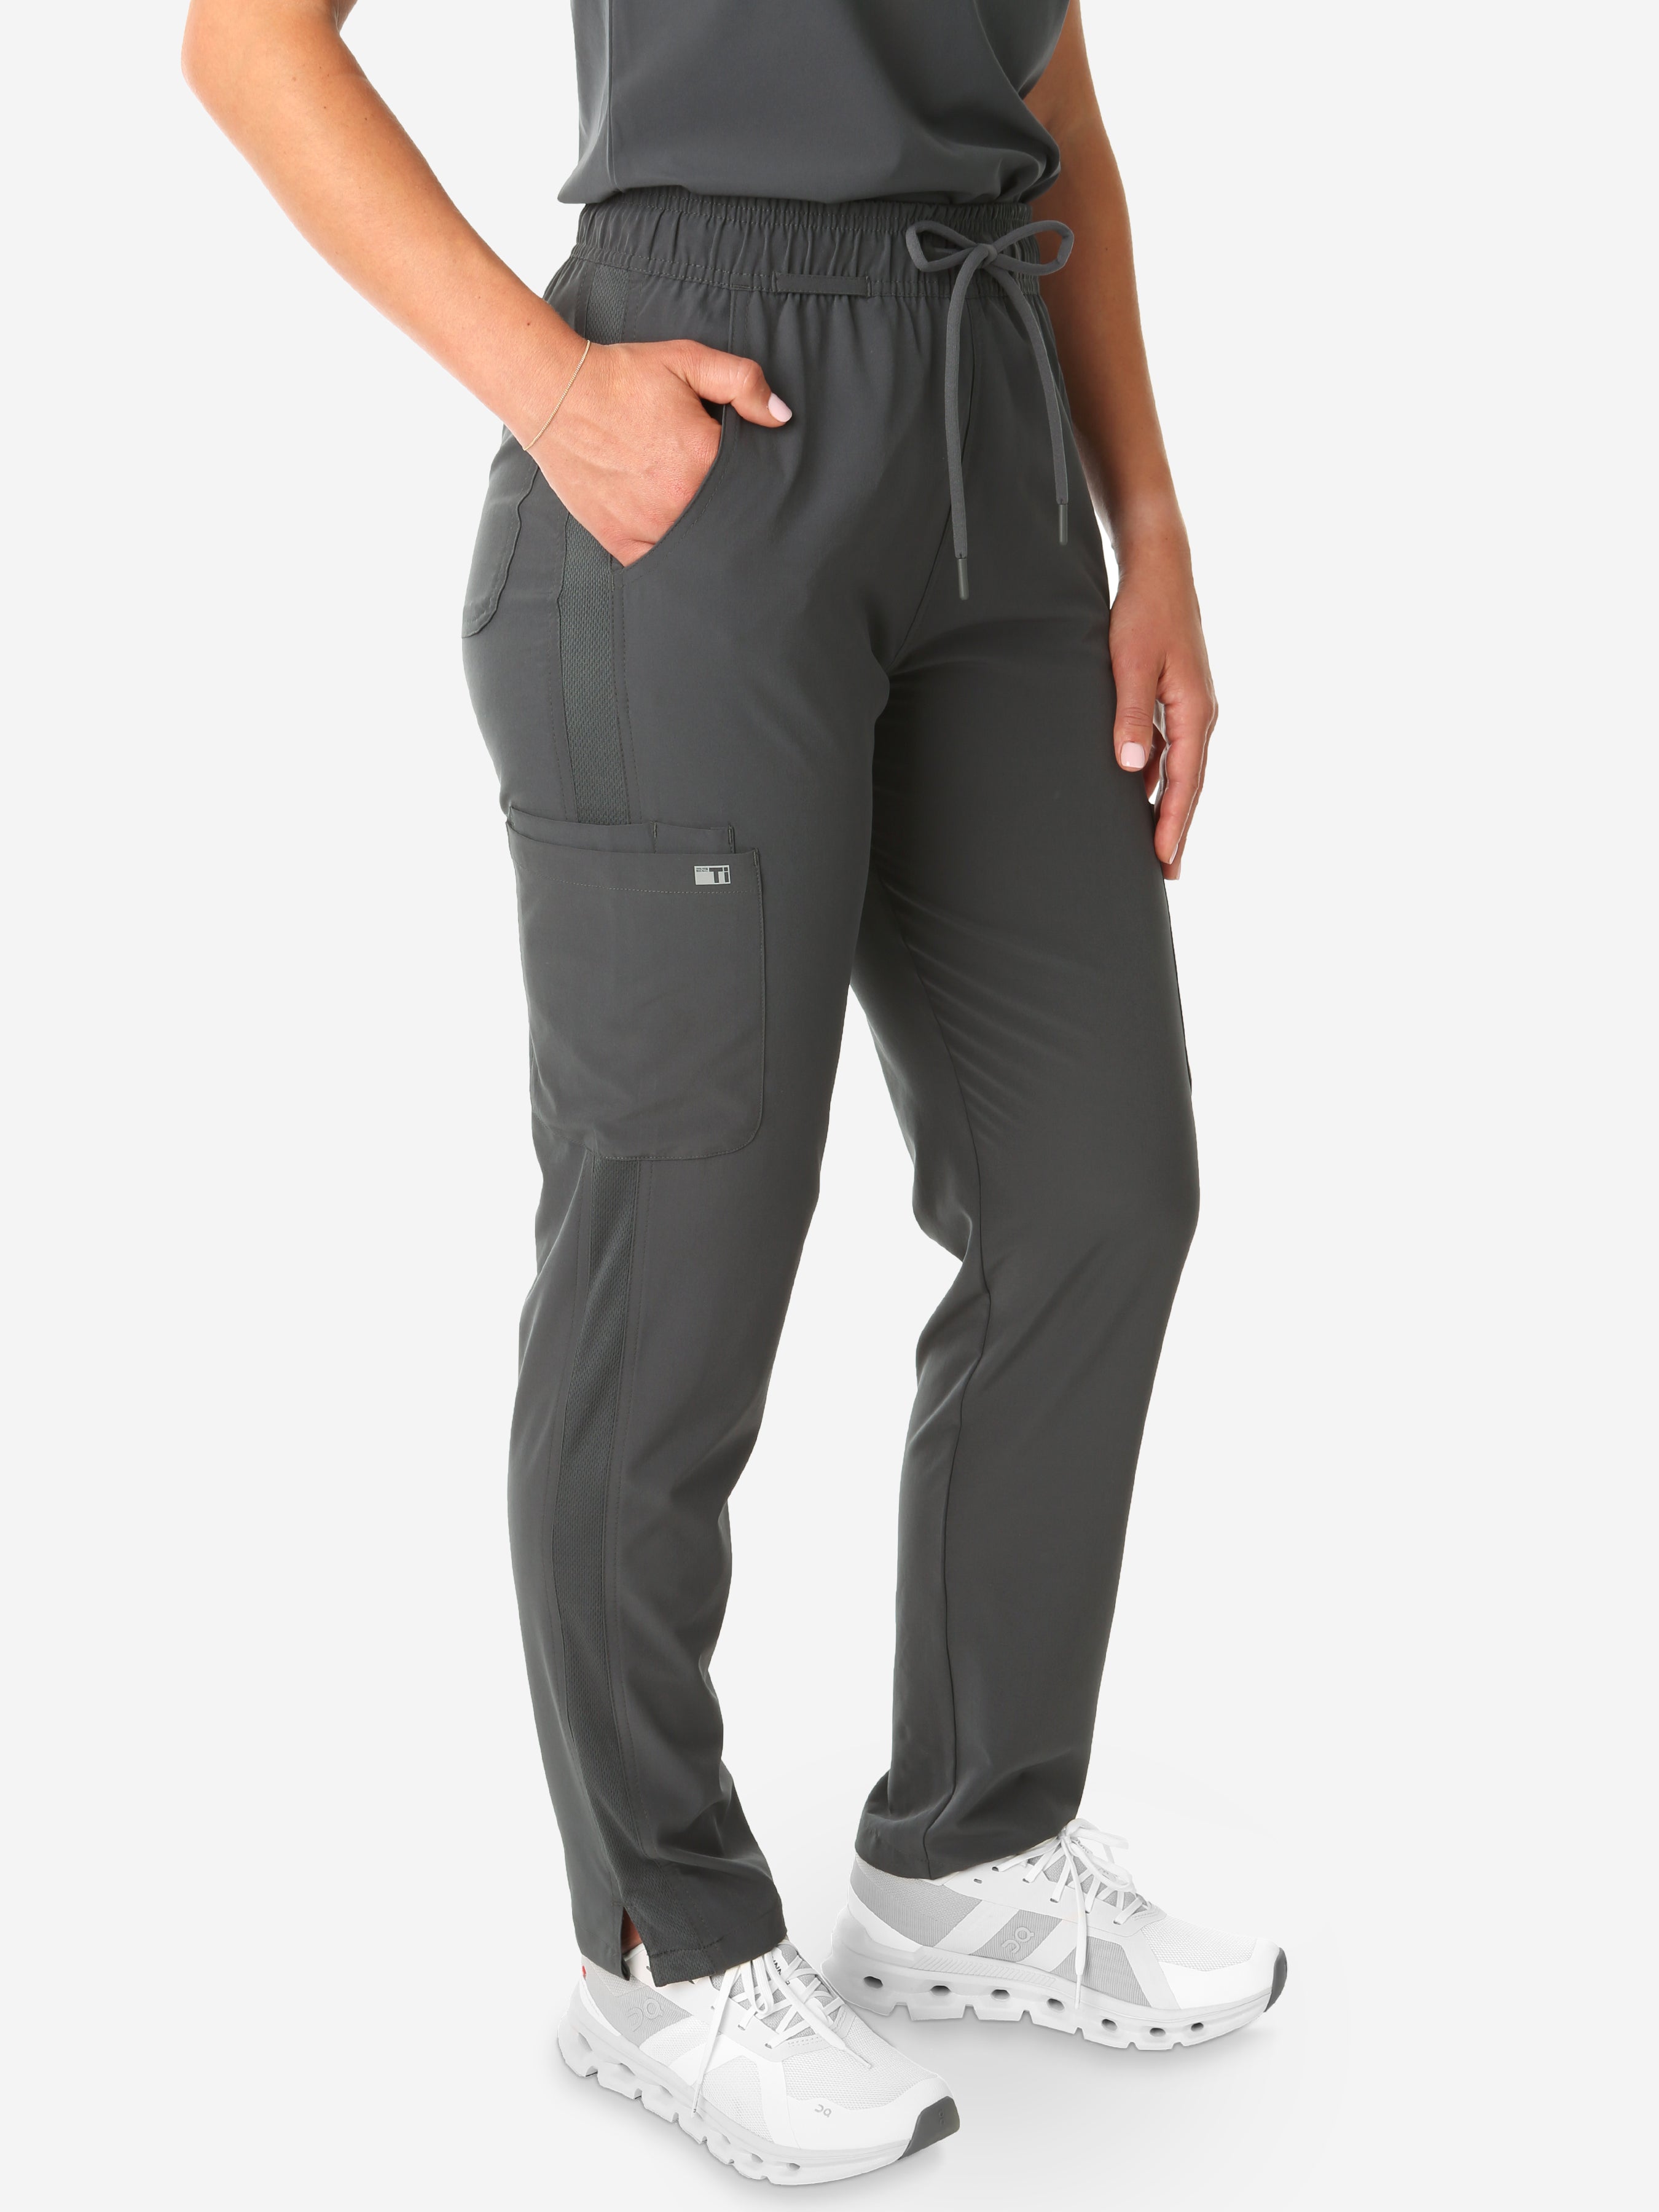 TiScrubs Charcoal Gray Women&#39;s Stretch 9-Pocket Pants Side View Pants Only